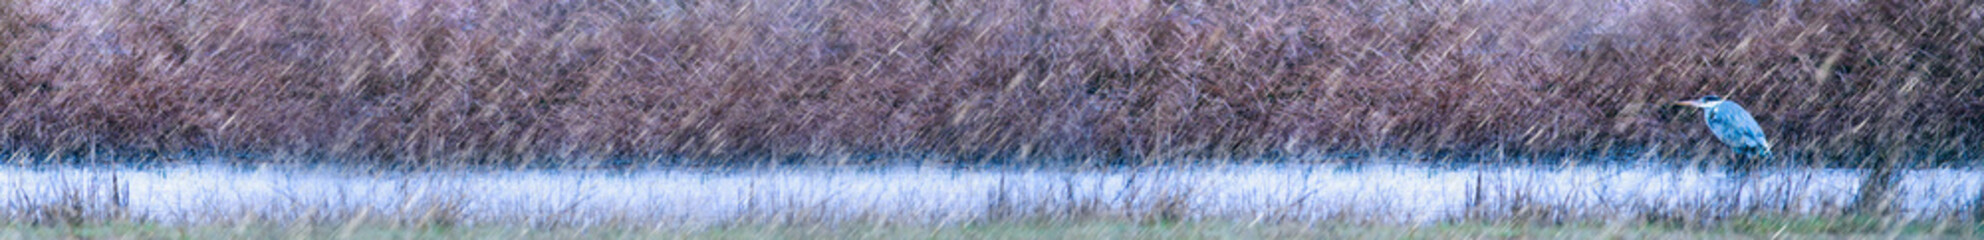 Horizontal nature banner. Winter nature background.